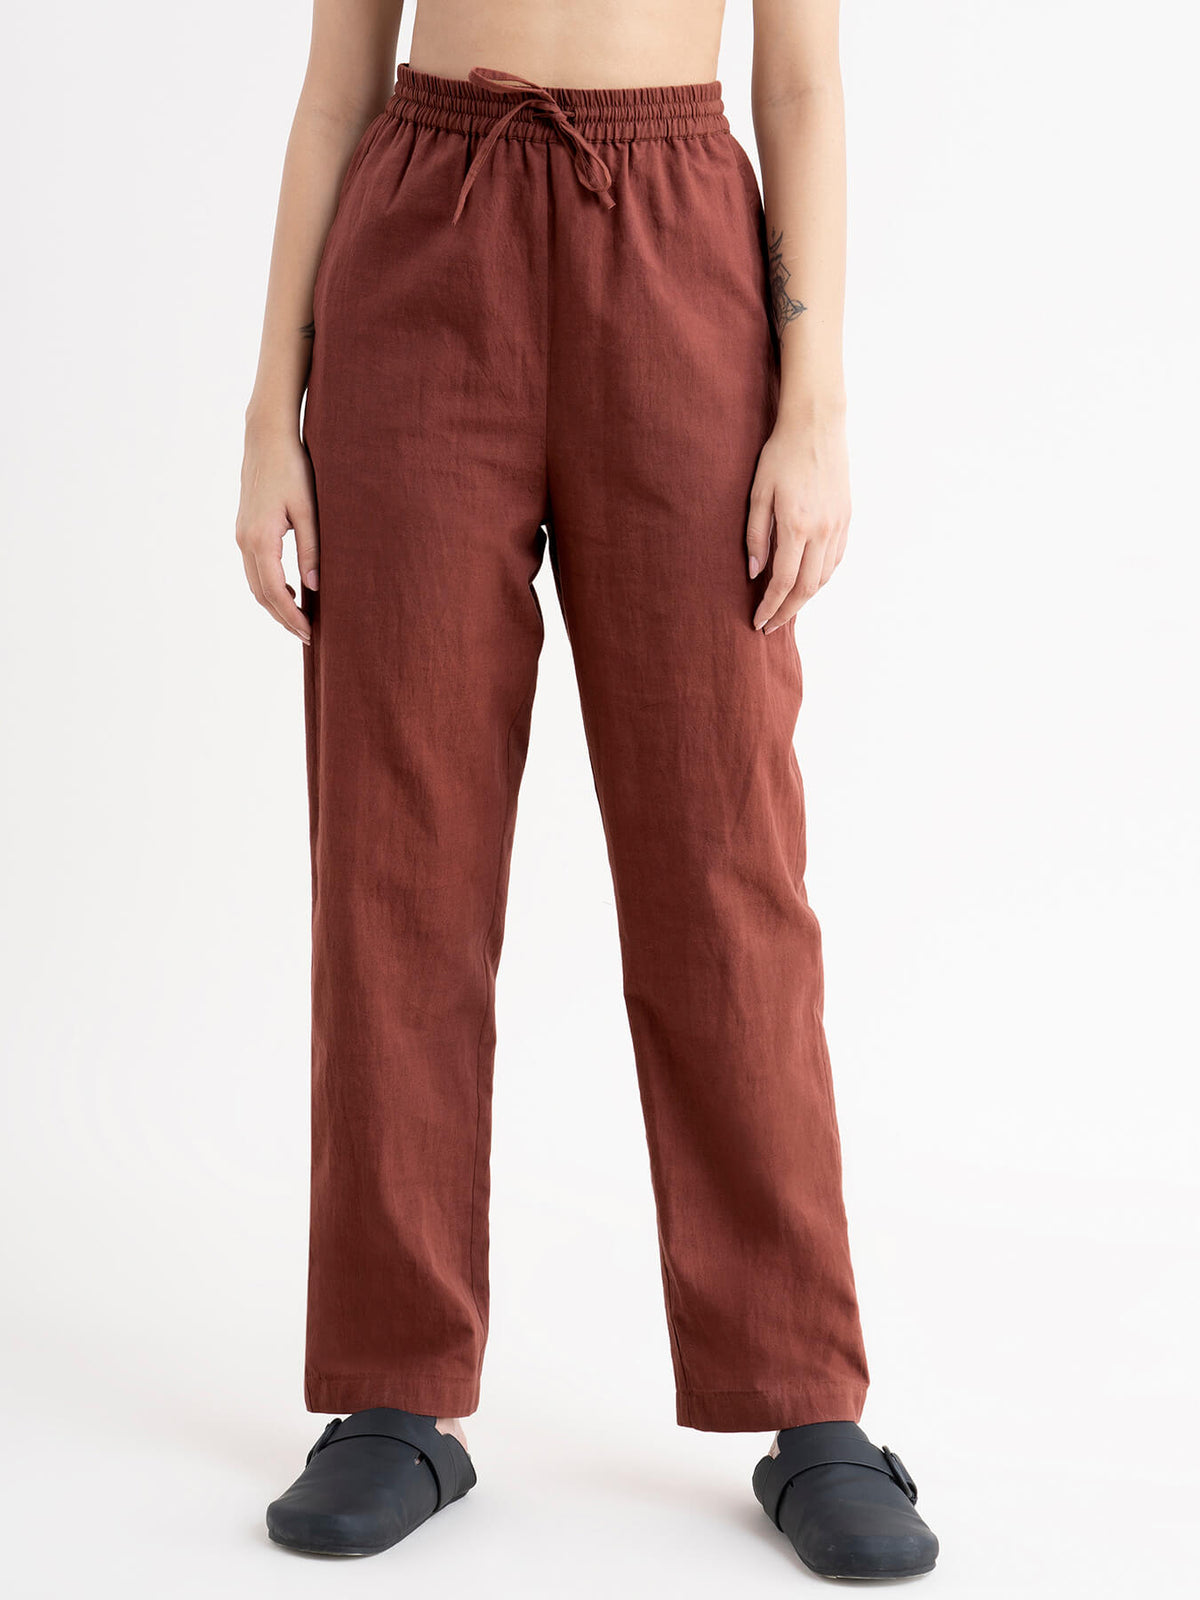 Linen Drawstring Trousers - Brown